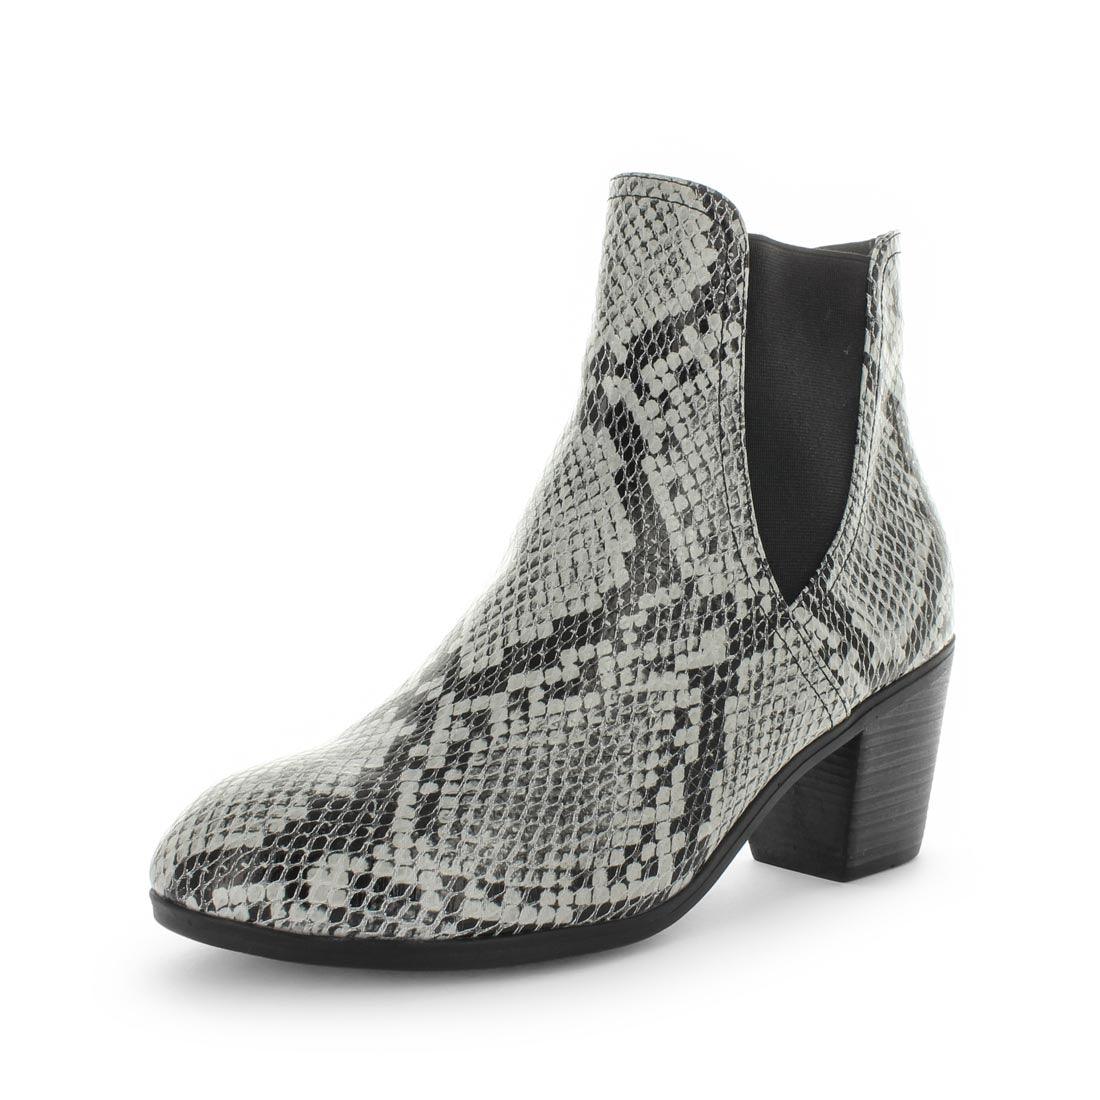 HOLIVIA by ZOLA - iShoes - Sale, Women's Shoes, Women's Shoes: Boots - FOOTWEAR-FOOTWEAR